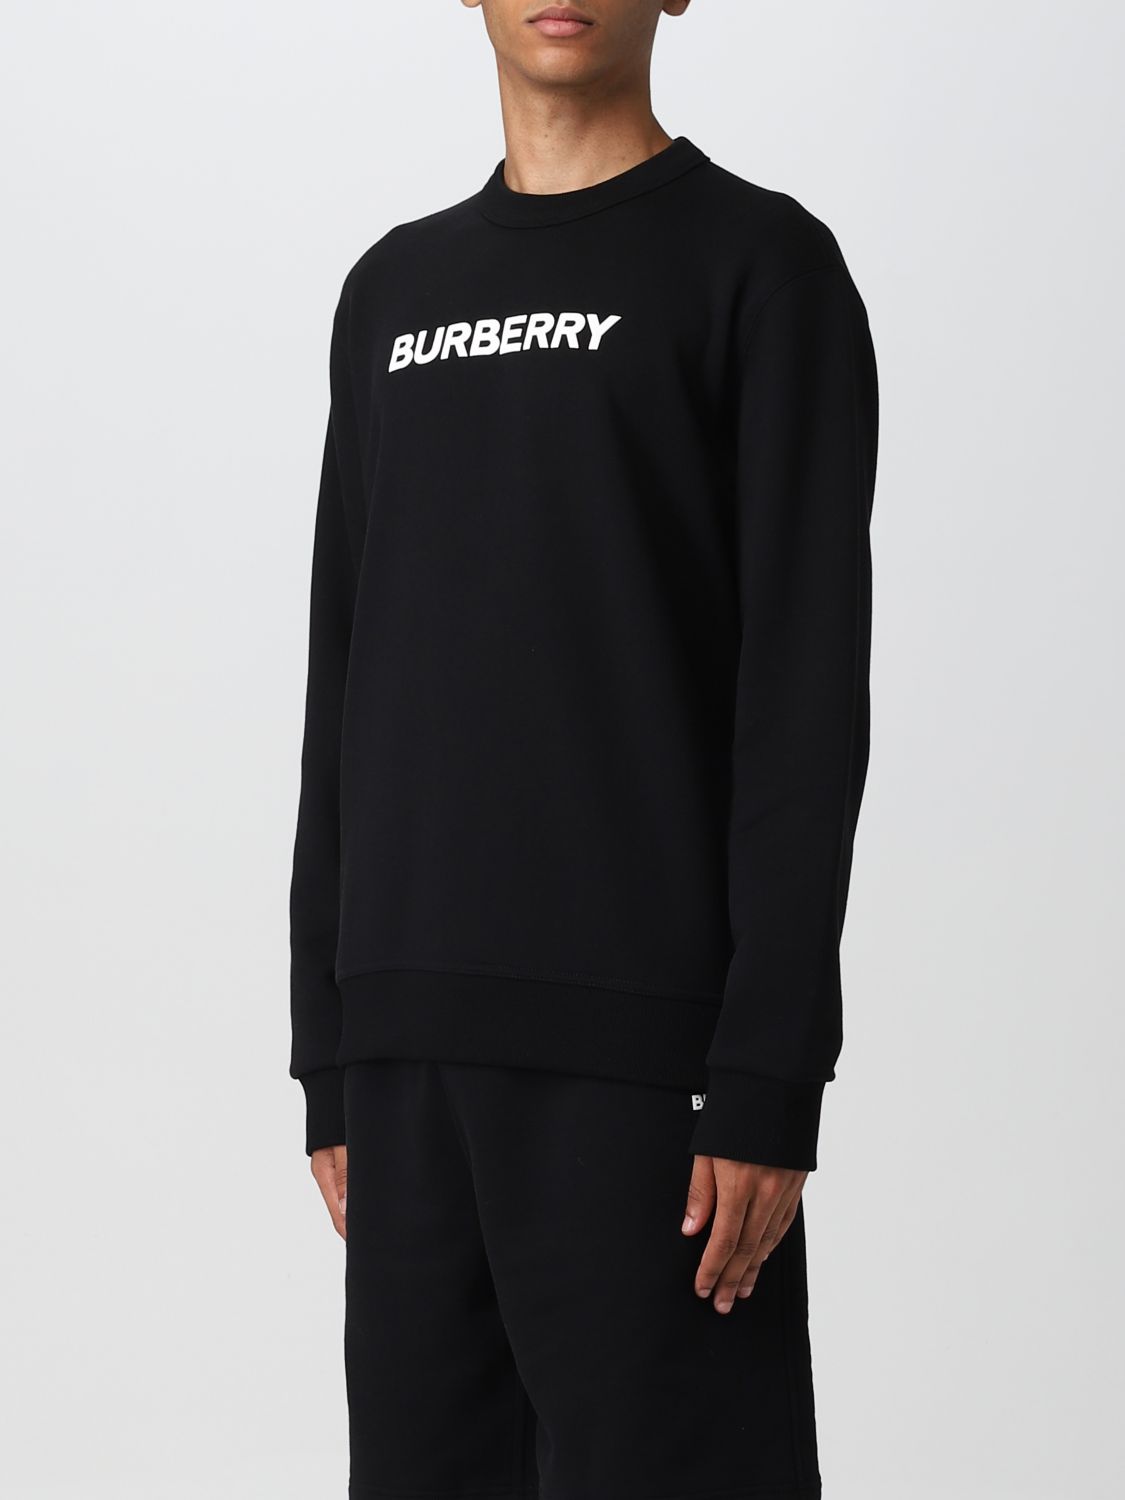 BURBERRY: スウェットシャツ メンズ - ブラック | スウェットシャツ Burberry 8055312 GIGLIO.COM